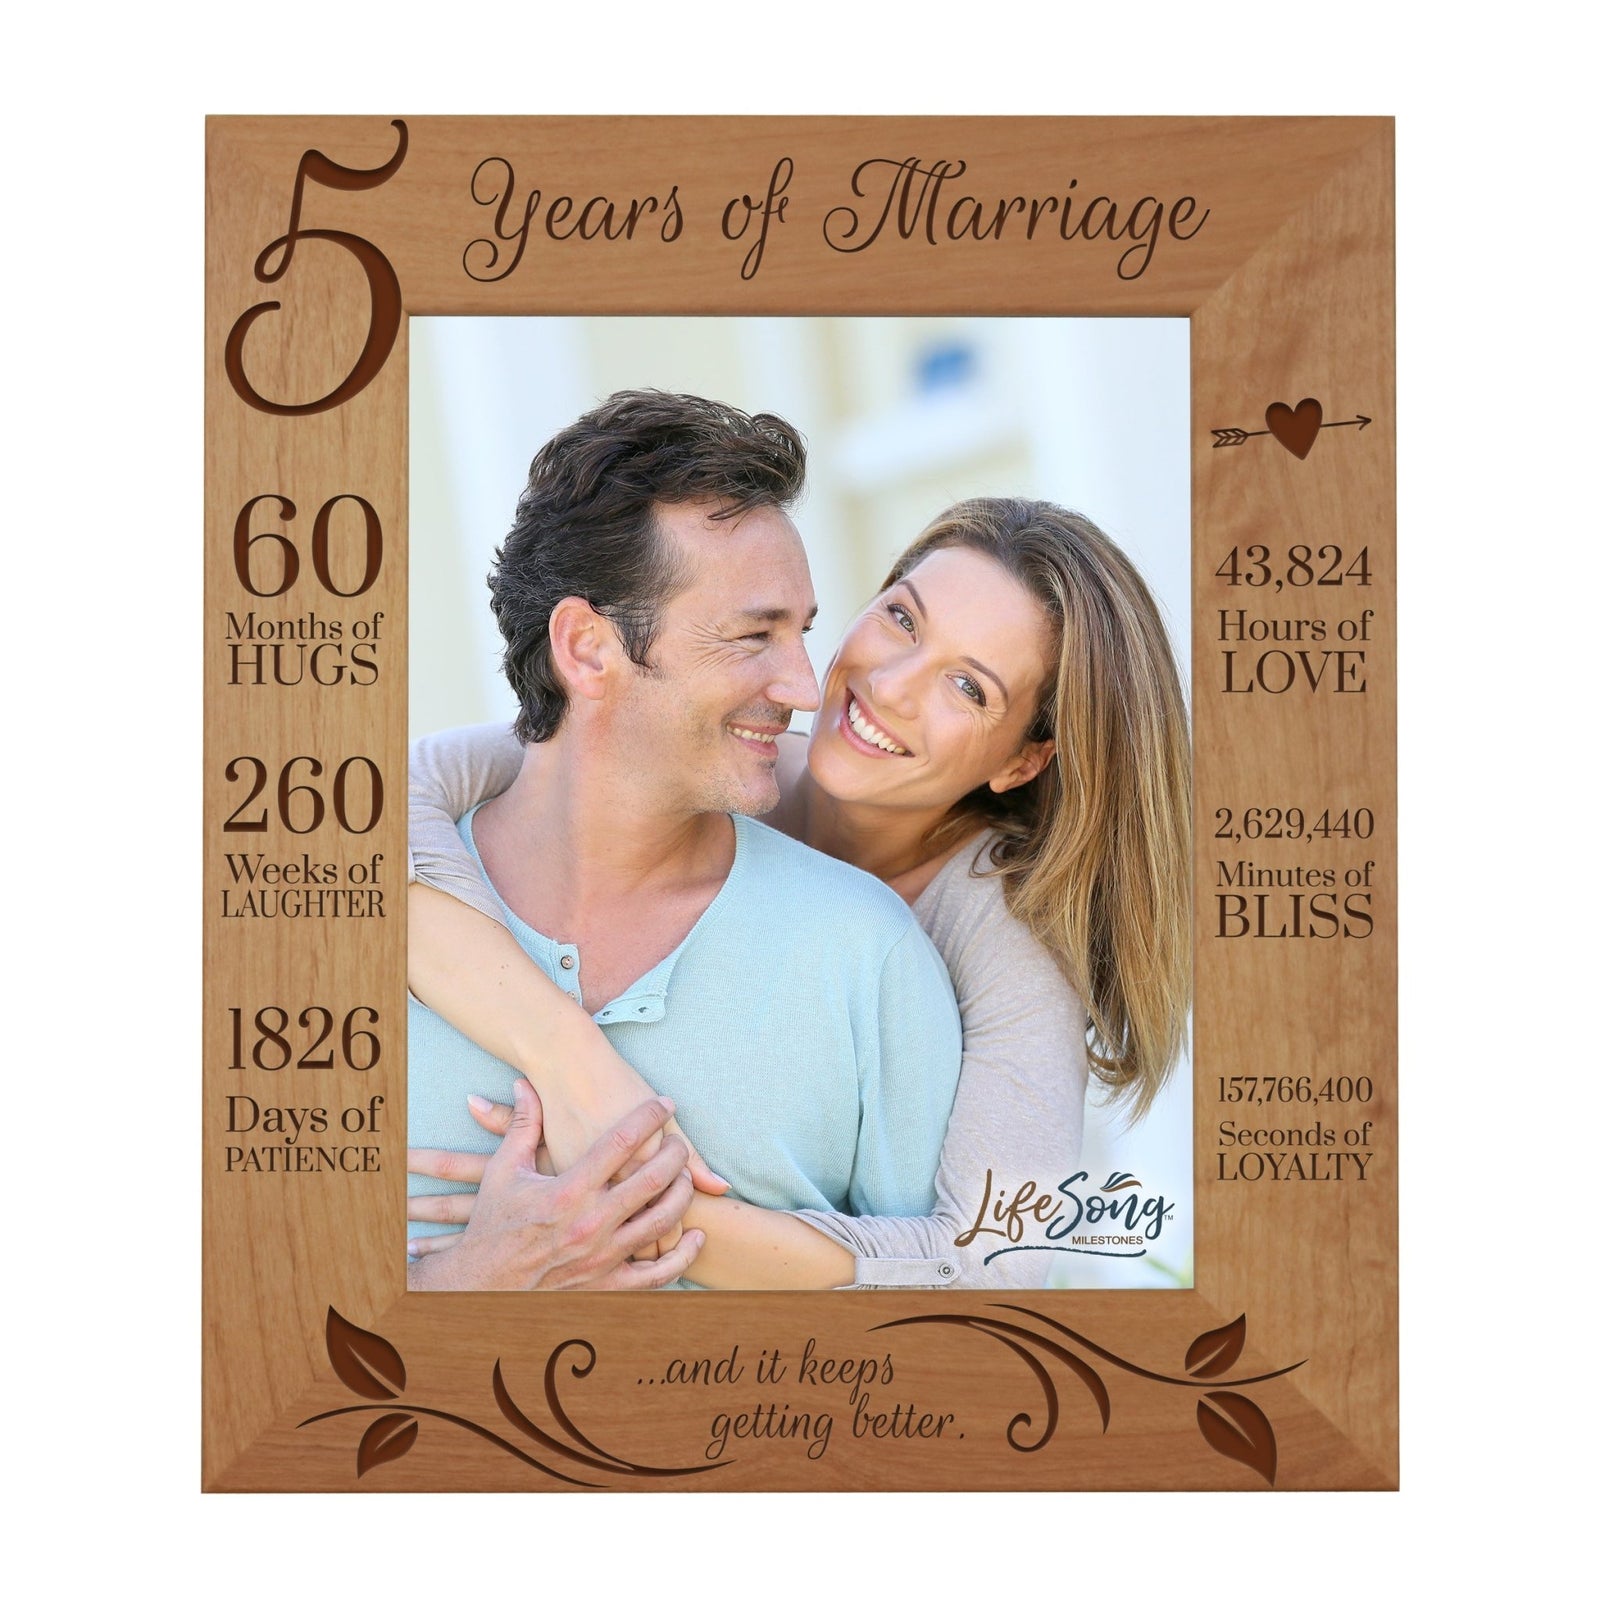 Lifesong Milestones Couples 5th Wedding Anniversary Photo Frame Home Decor Gift Ideas